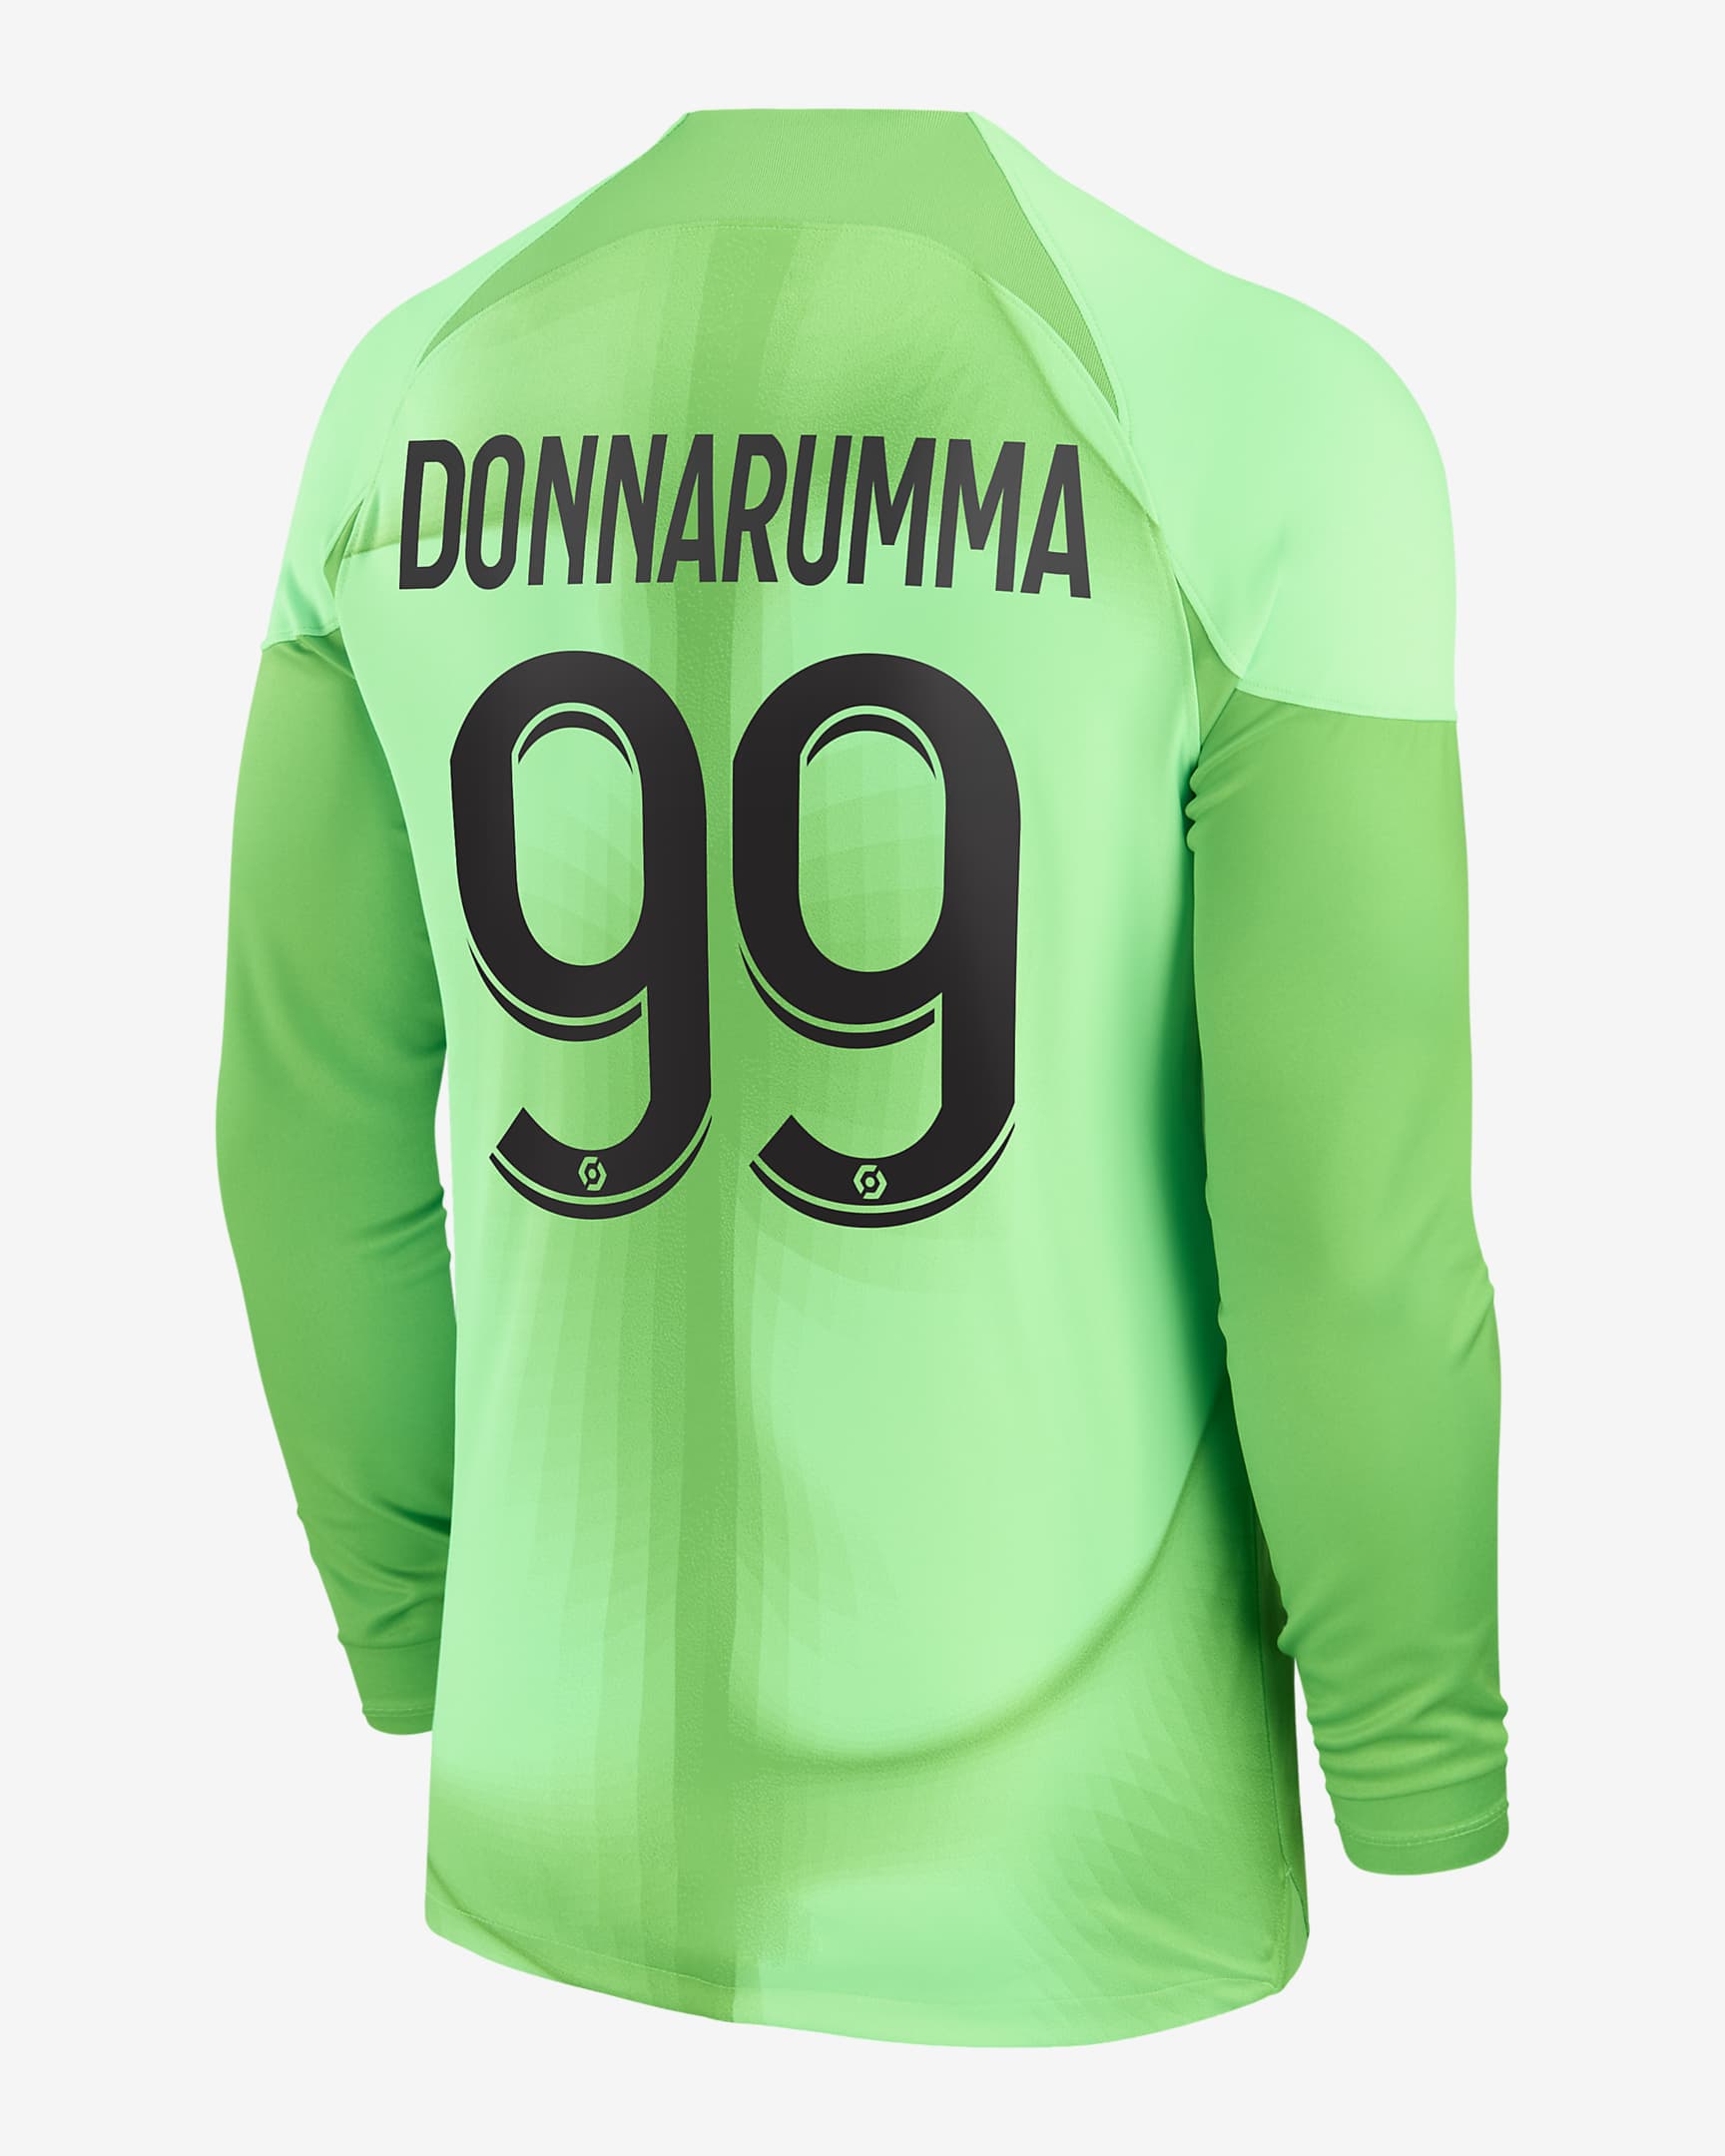 Jersey de fútbol Nike Dri-FIT para hombre del Paris Saint-Germain portero, Gianluigi Donnarumma 2022/23 Stadium